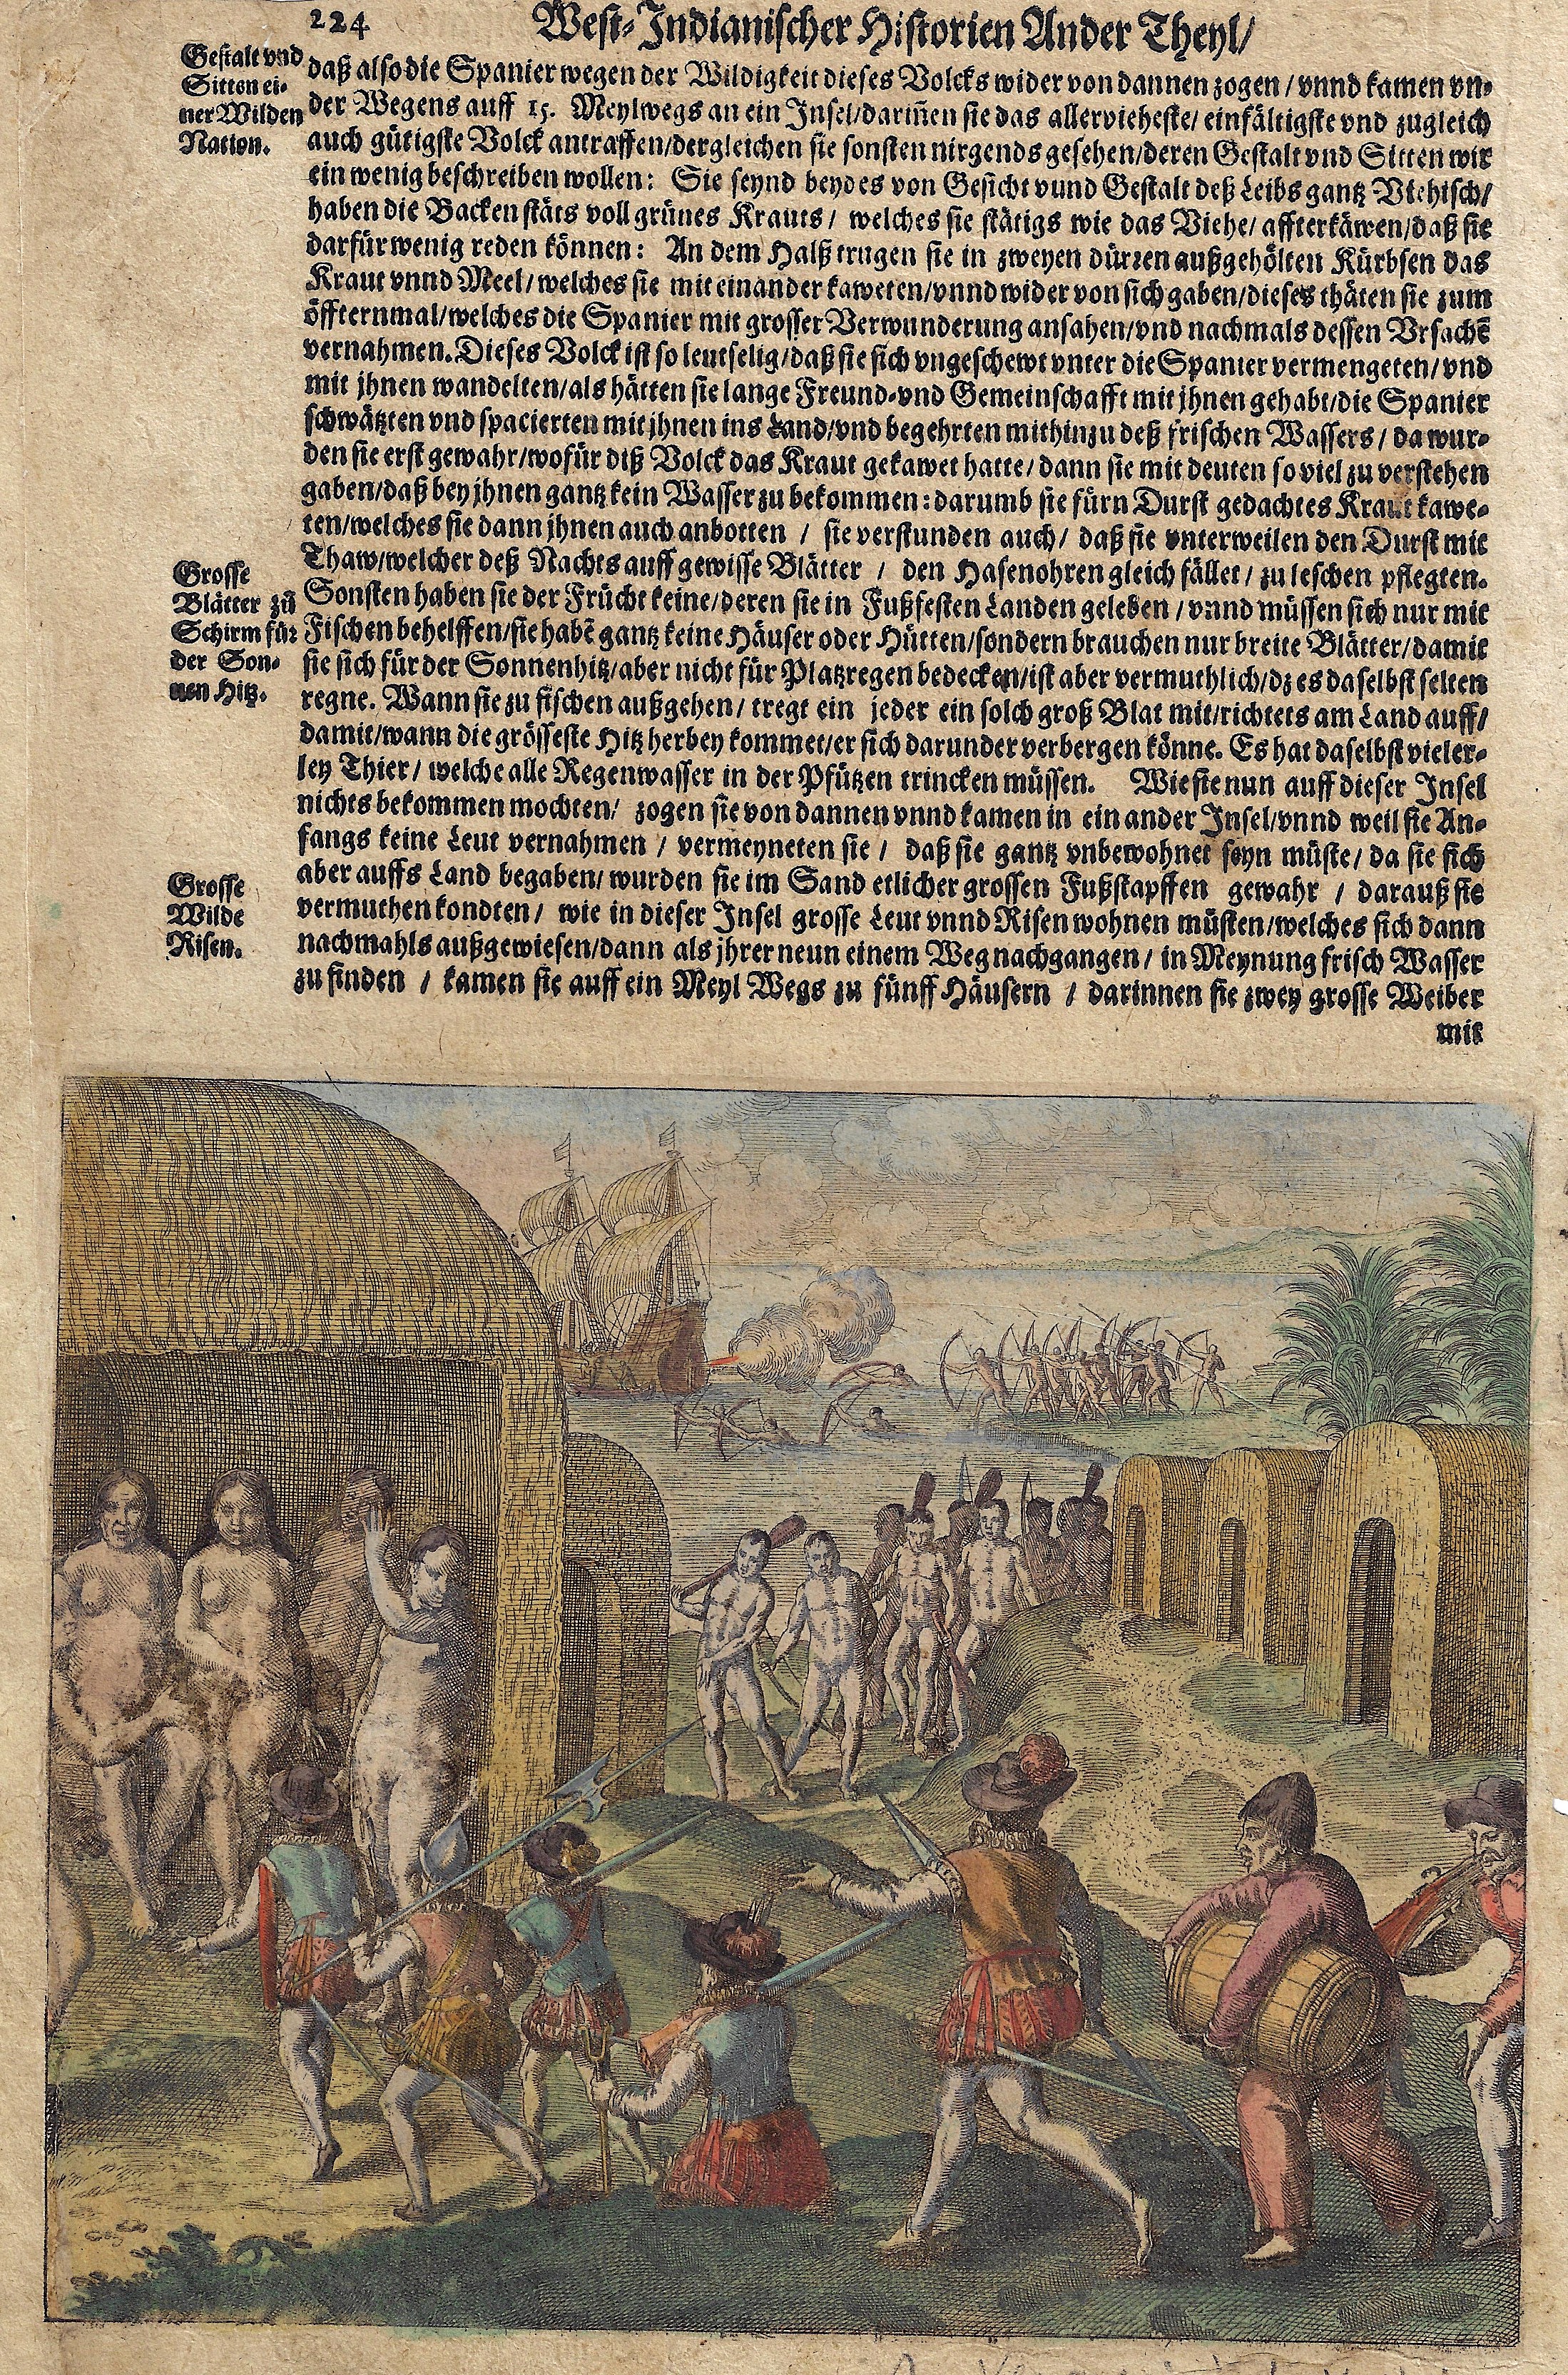 Bry, de Theodor, Dietrich Herrn Americi Vesputii andere Schiffart in Americam Anno Christi 1499.